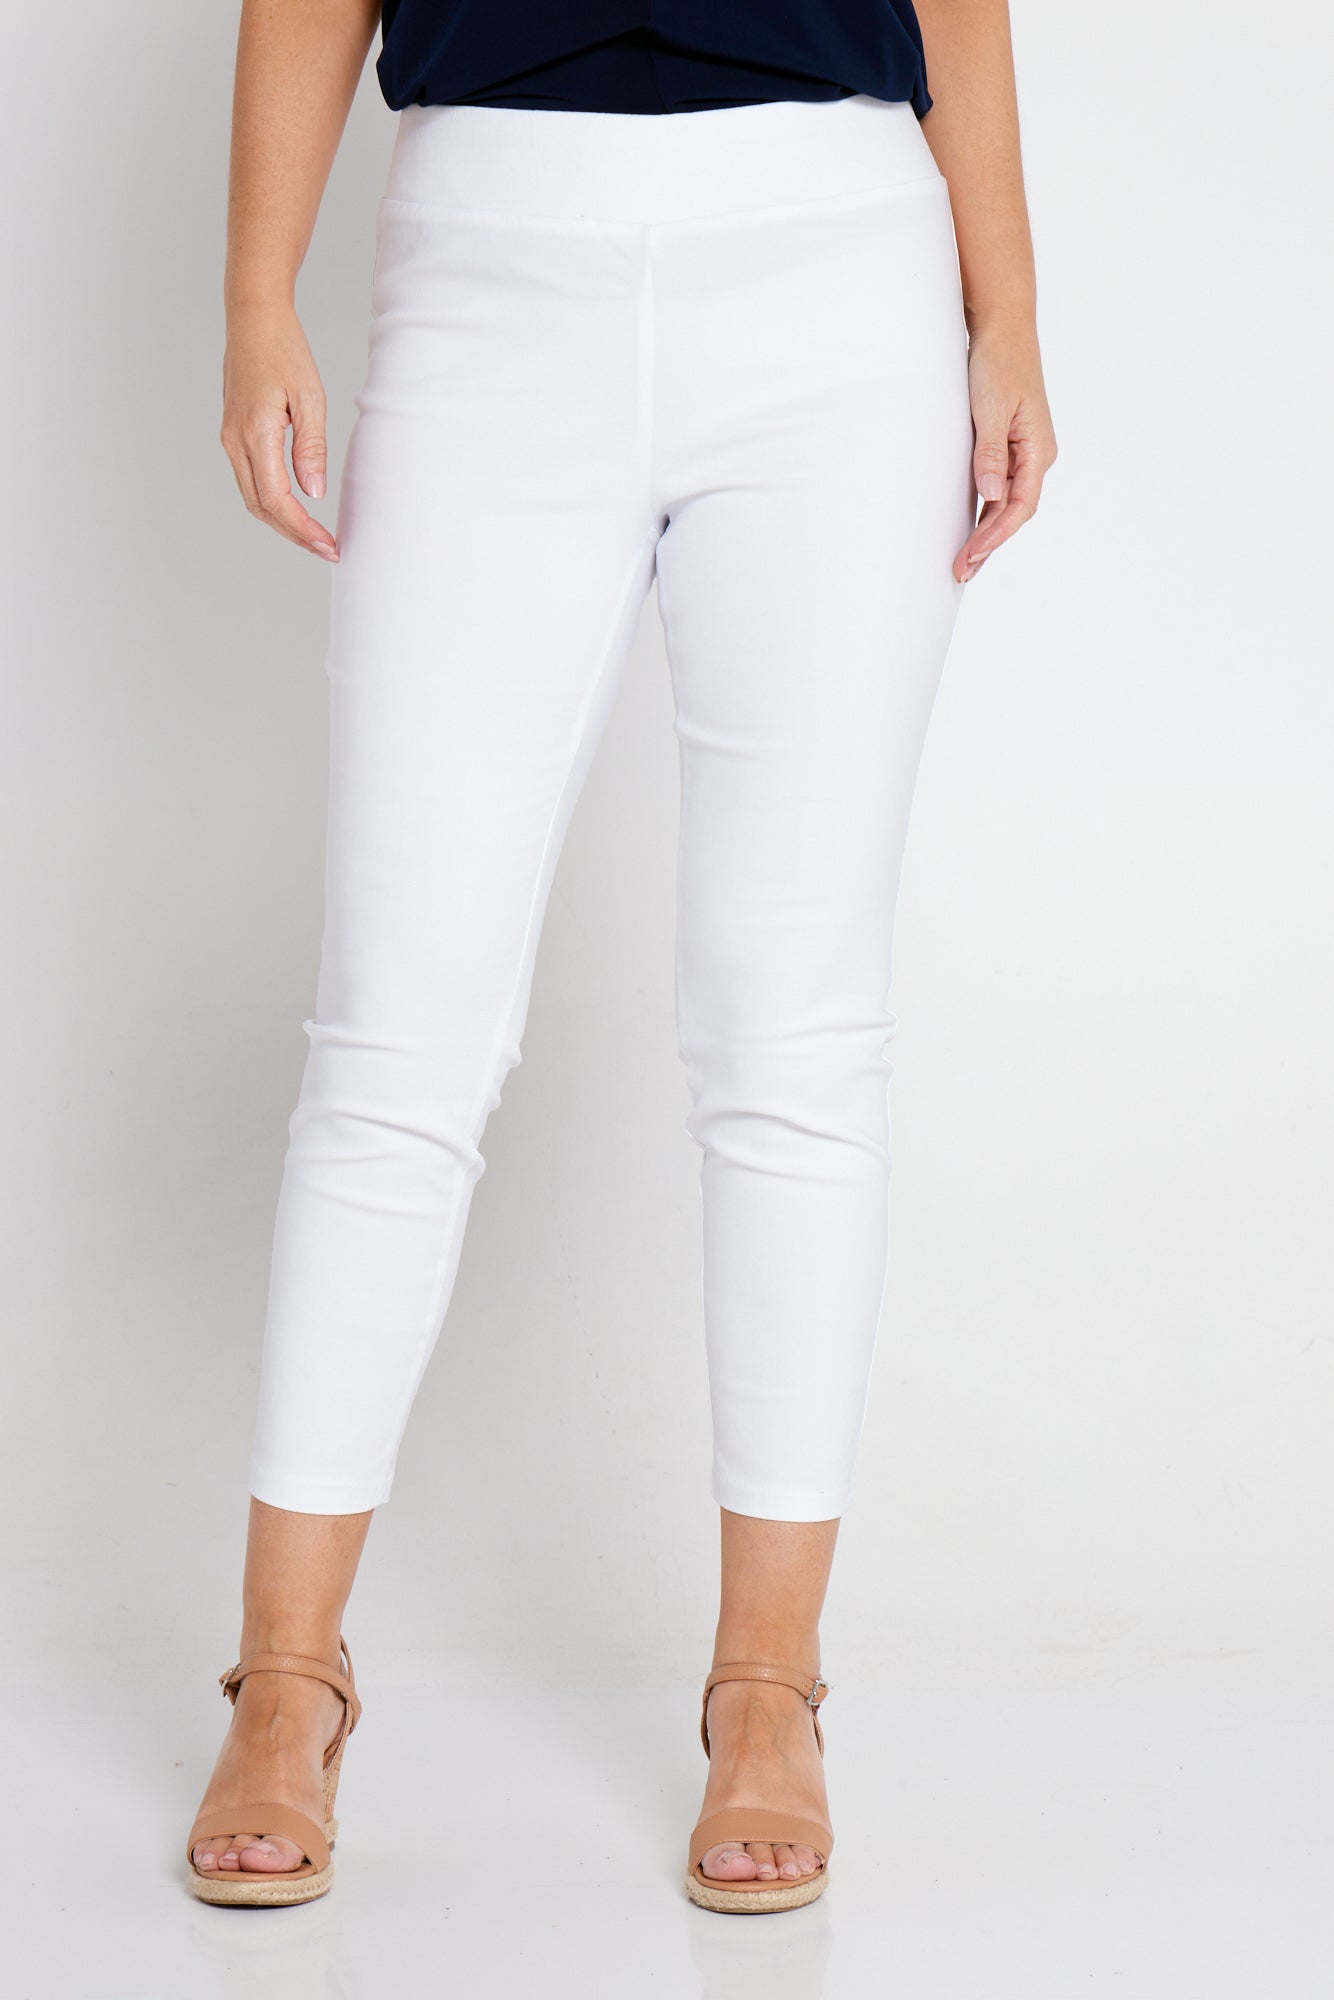 Moira Bengaline Pants - White